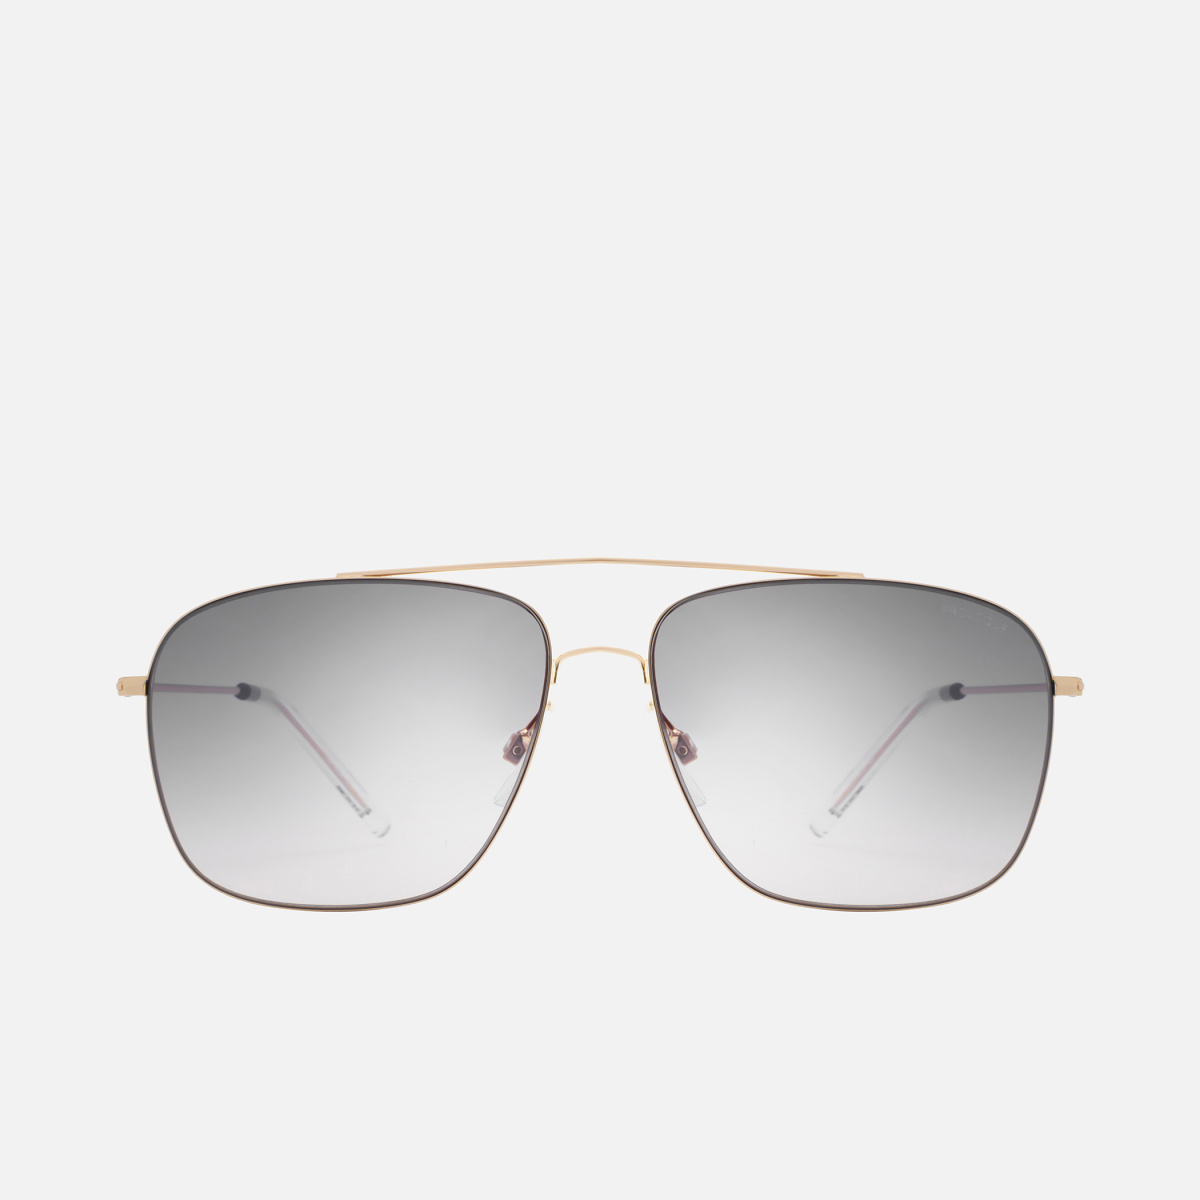 PROVOGUE Men UV-Protected Square Sunglasses - PR-4269-C01